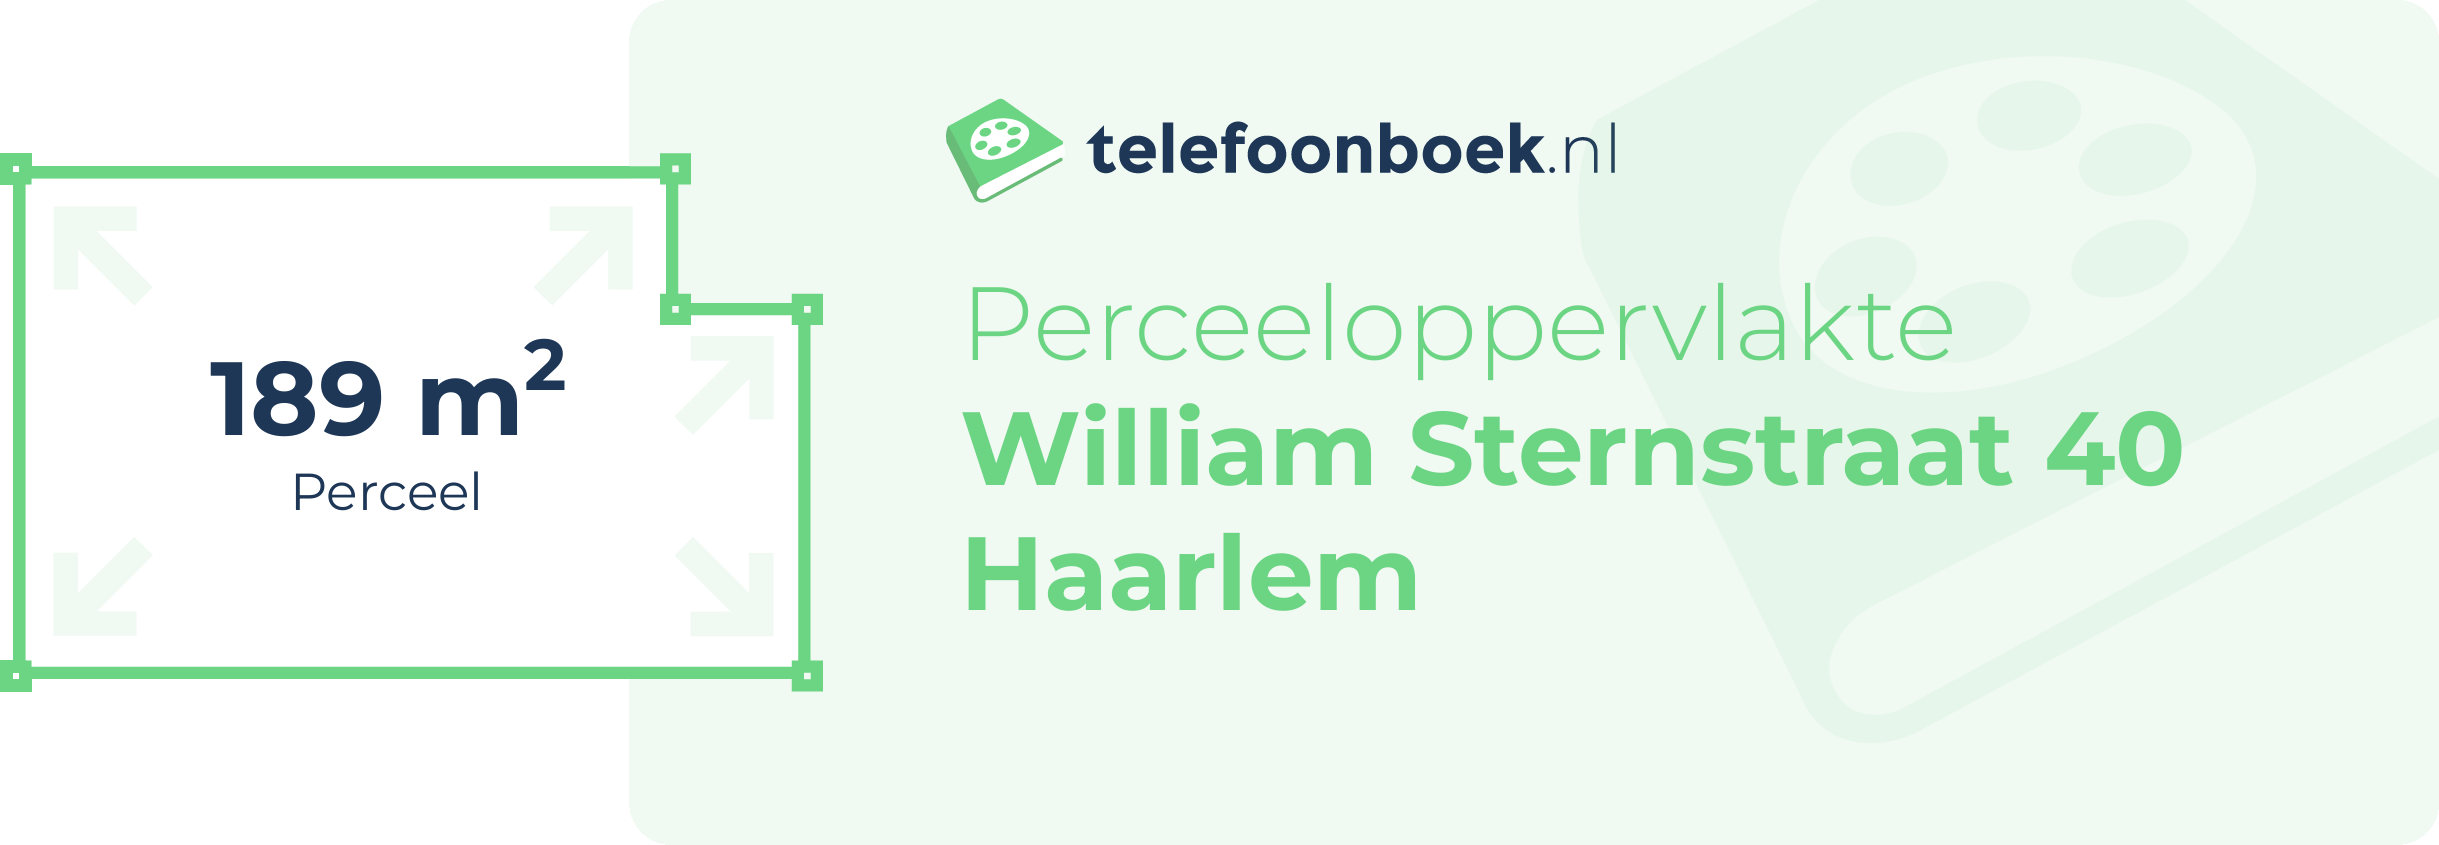 Perceeloppervlakte William Sternstraat 40 Haarlem